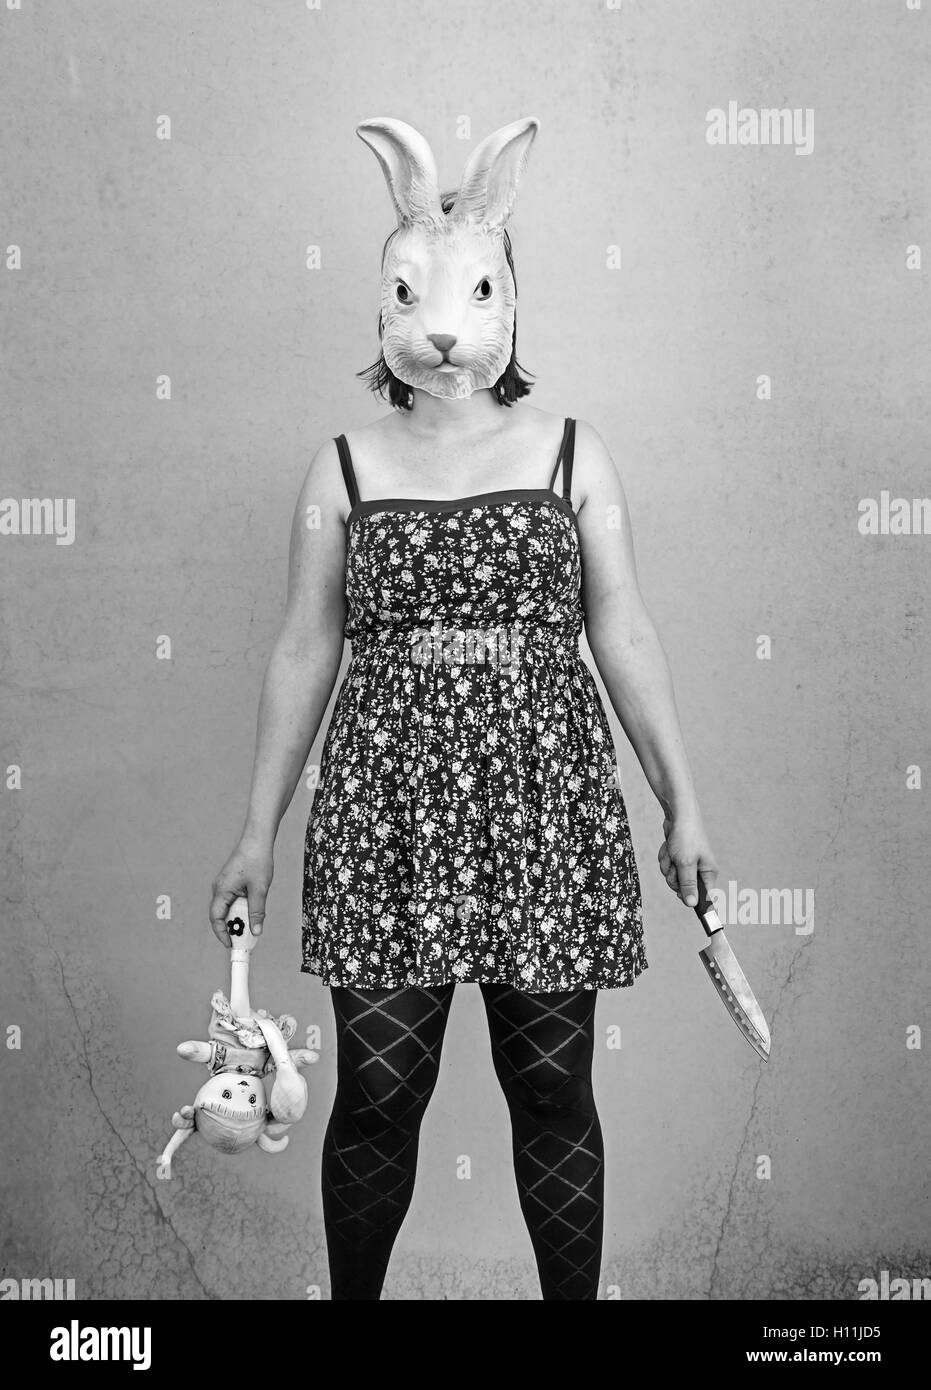 Girl in halloween rabbit mask, fear and terror Stock Photo